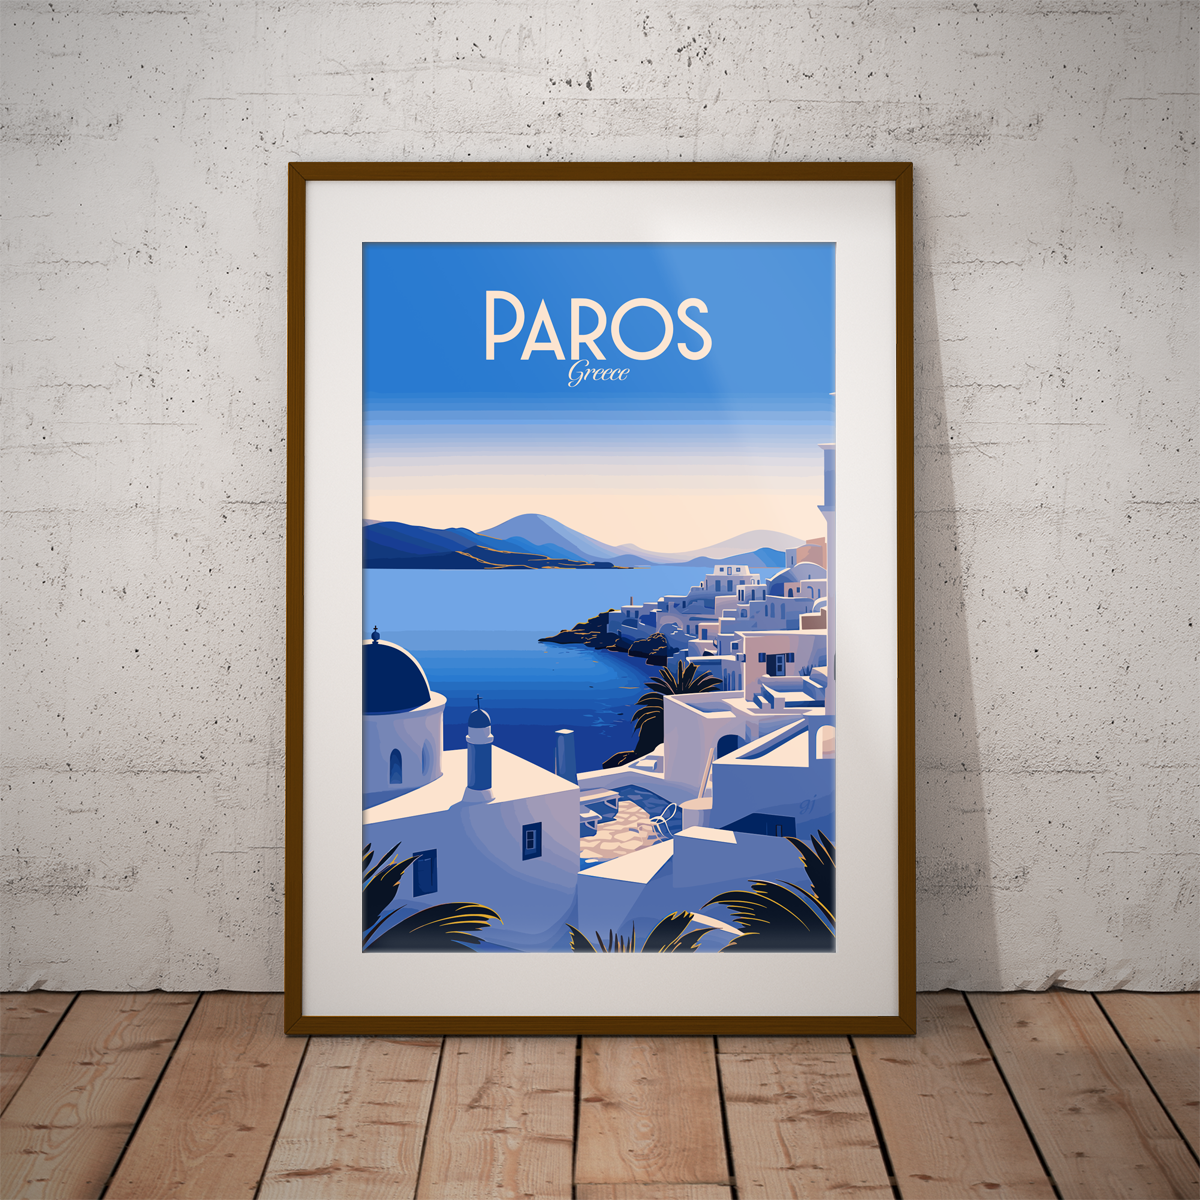 Paros poster by bon voyage design